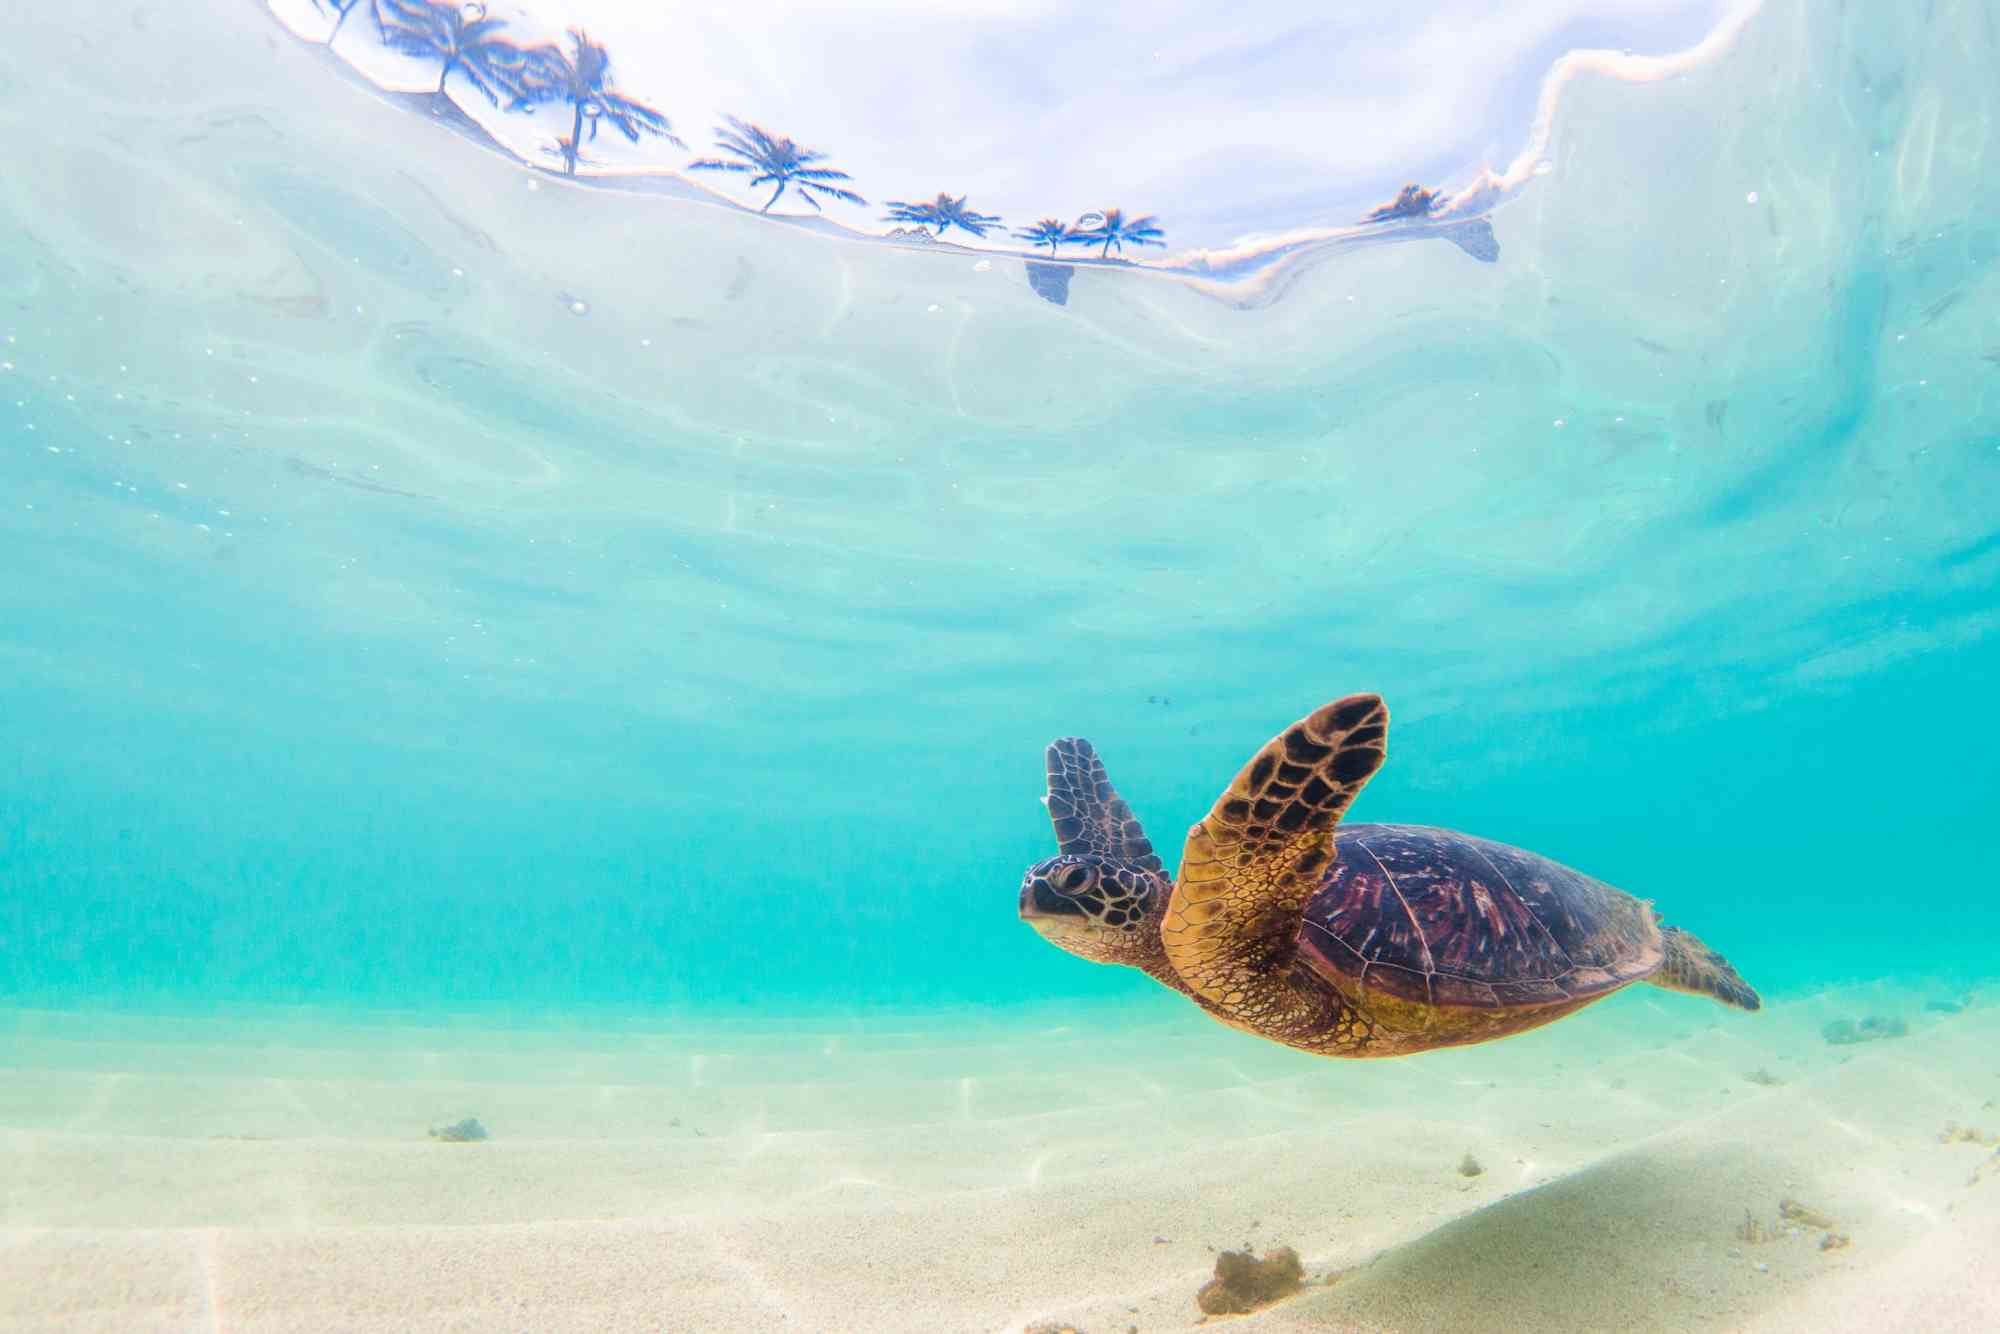 2017.12.26 - Green Sea Turtle Swimming in Pacific Ocean - Hawaii - Shane Myers-Alamy Stock Photo